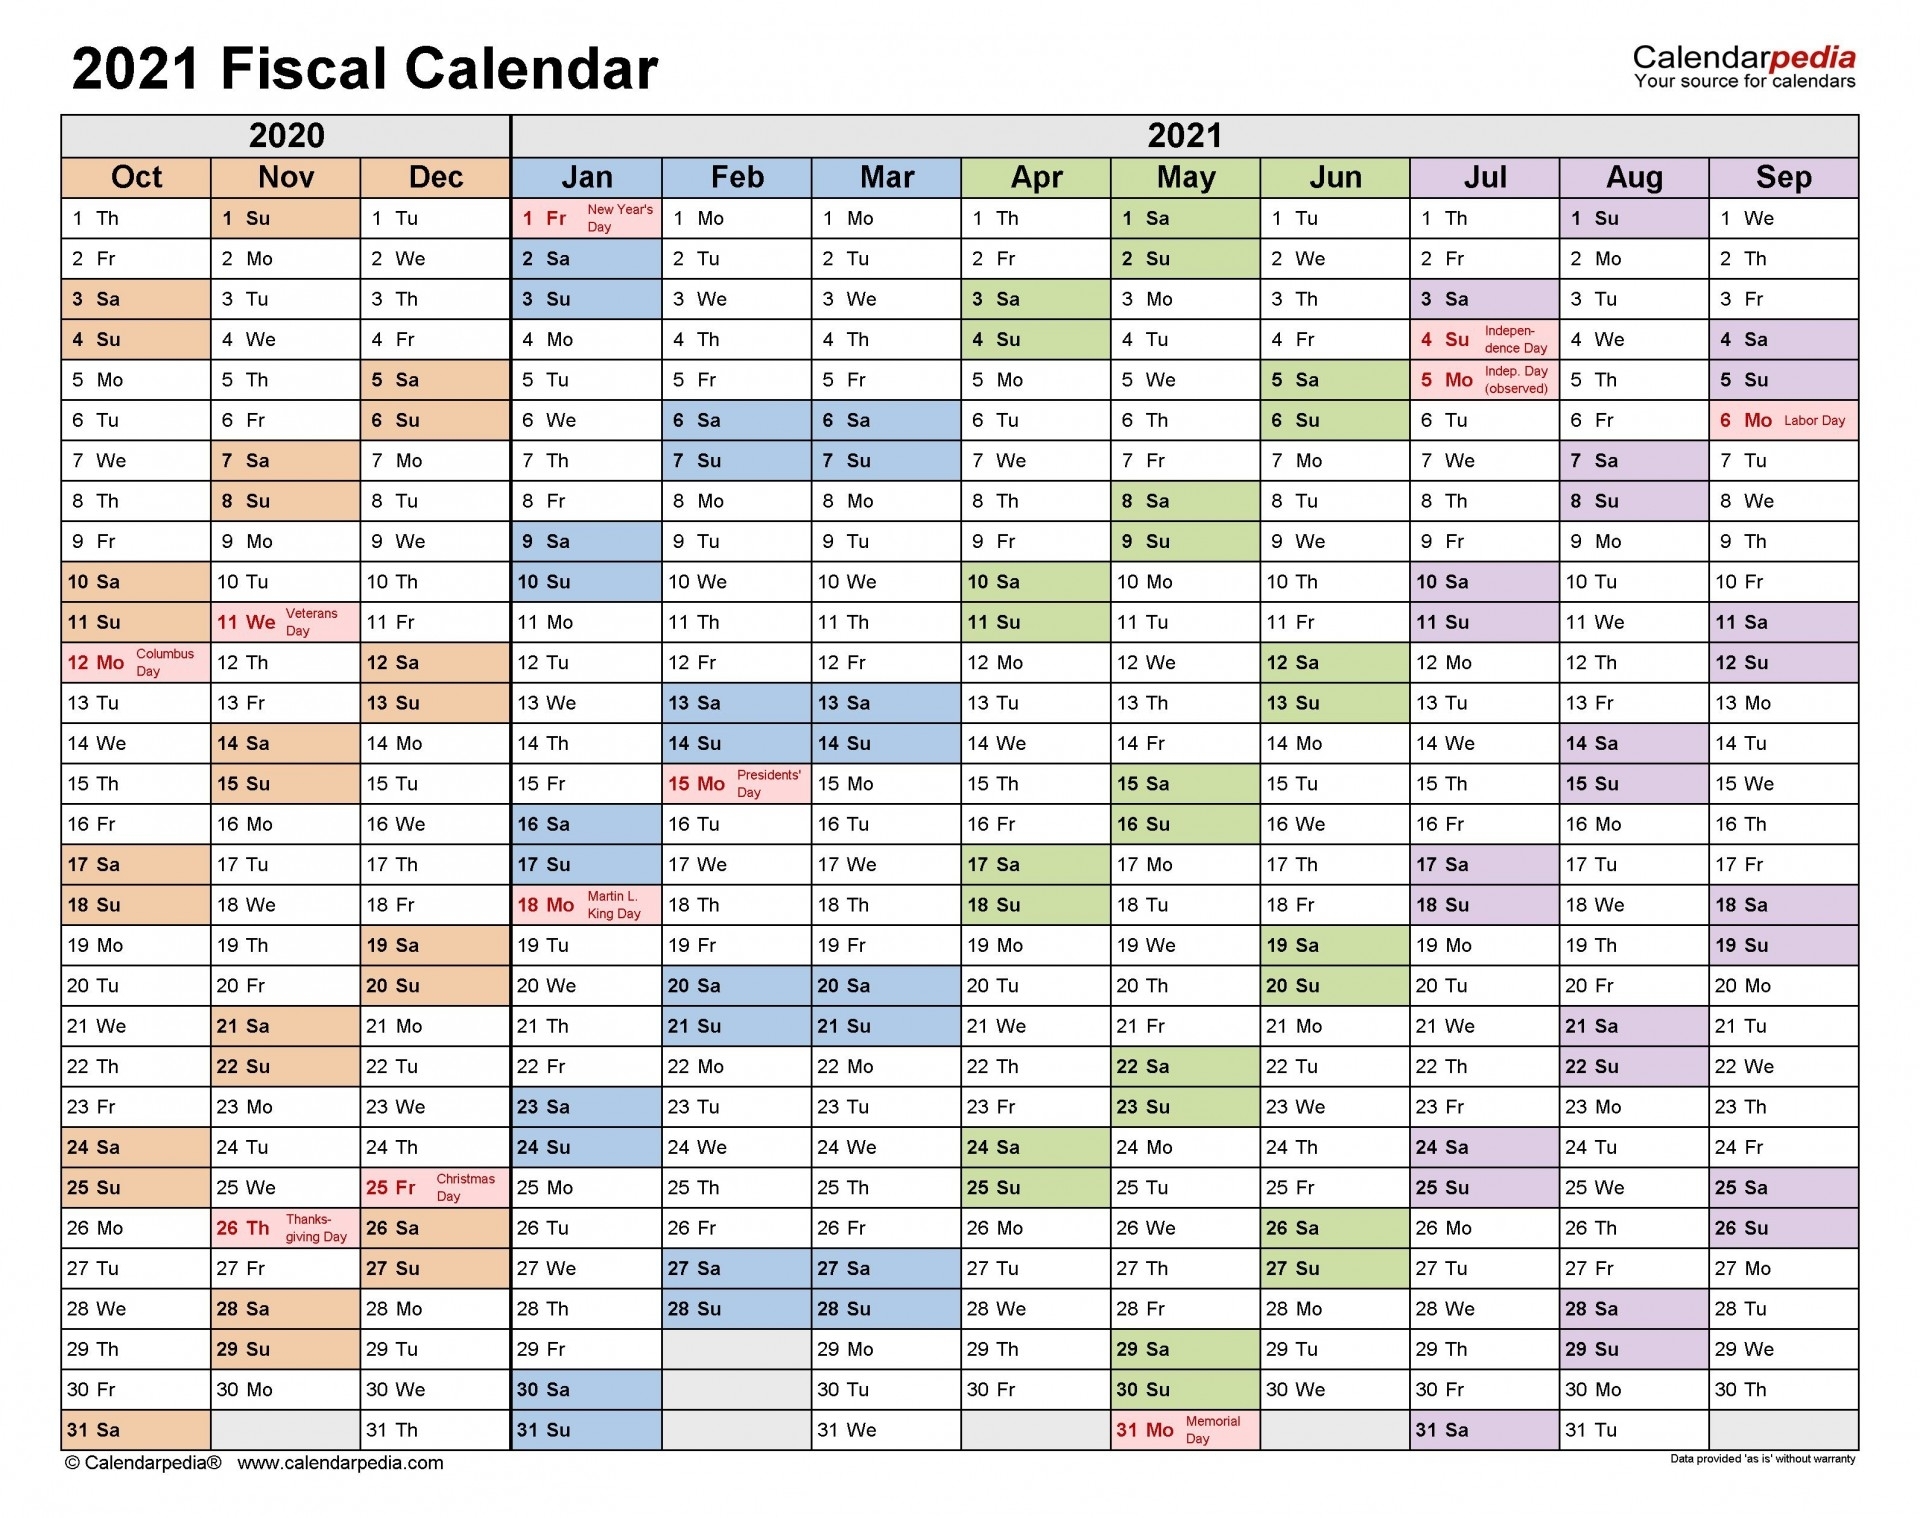 Excel Calendar 2021 Template ~ Addictionary